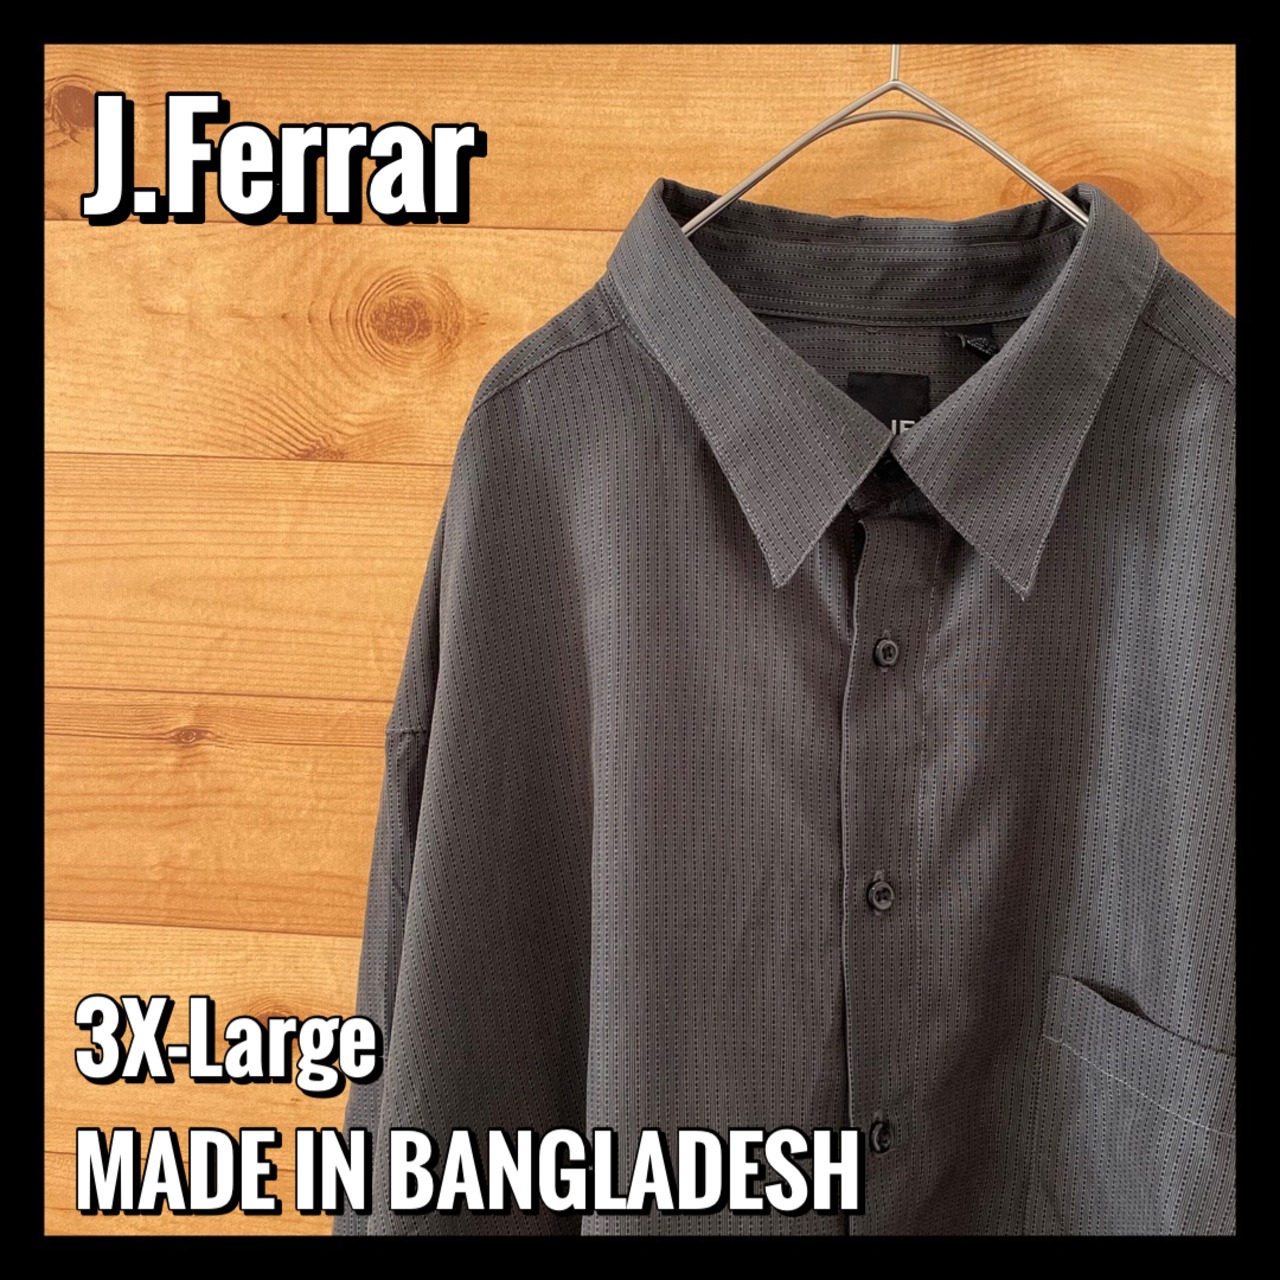 【J.Ferrar】ビッグサイズ 光沢のあるポリシャツ ストライプ柄 長袖シャツ 3XL オーバーサイズ US古着 アメリカ古着